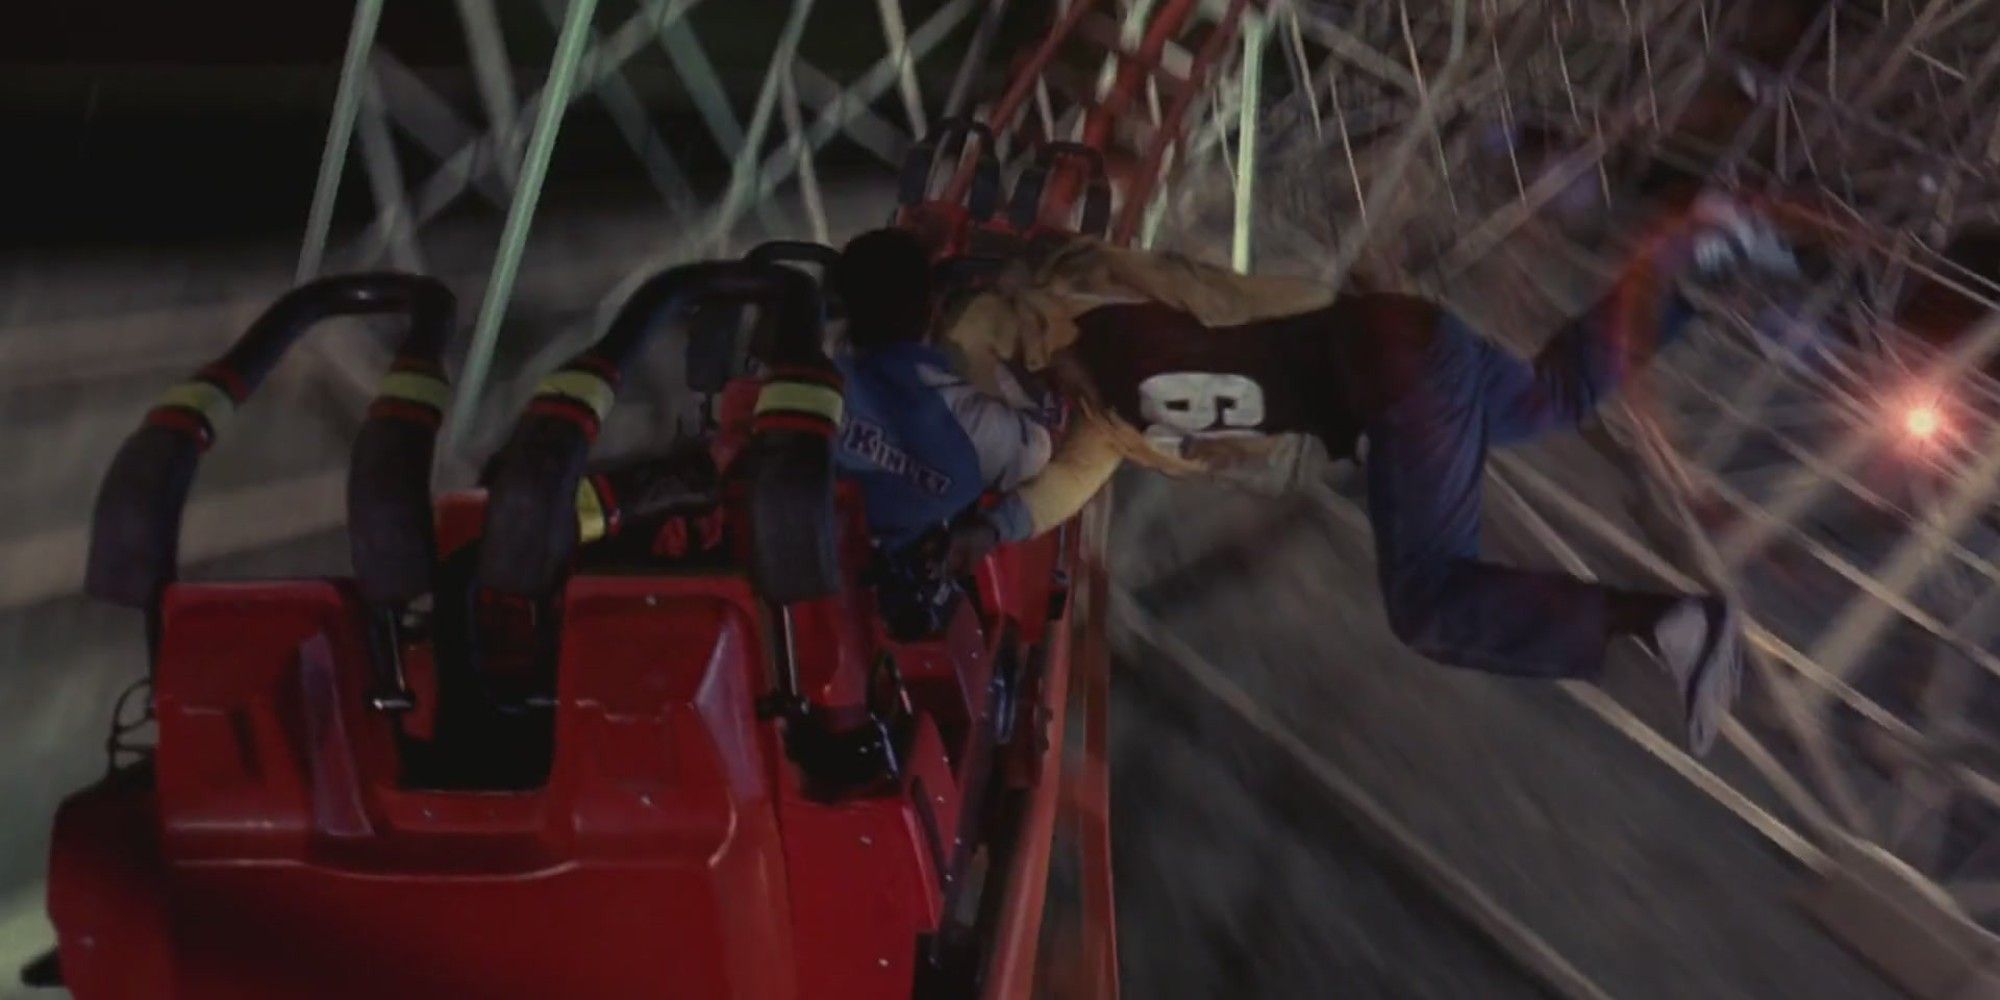 rollercoaster death scene in final destination 3